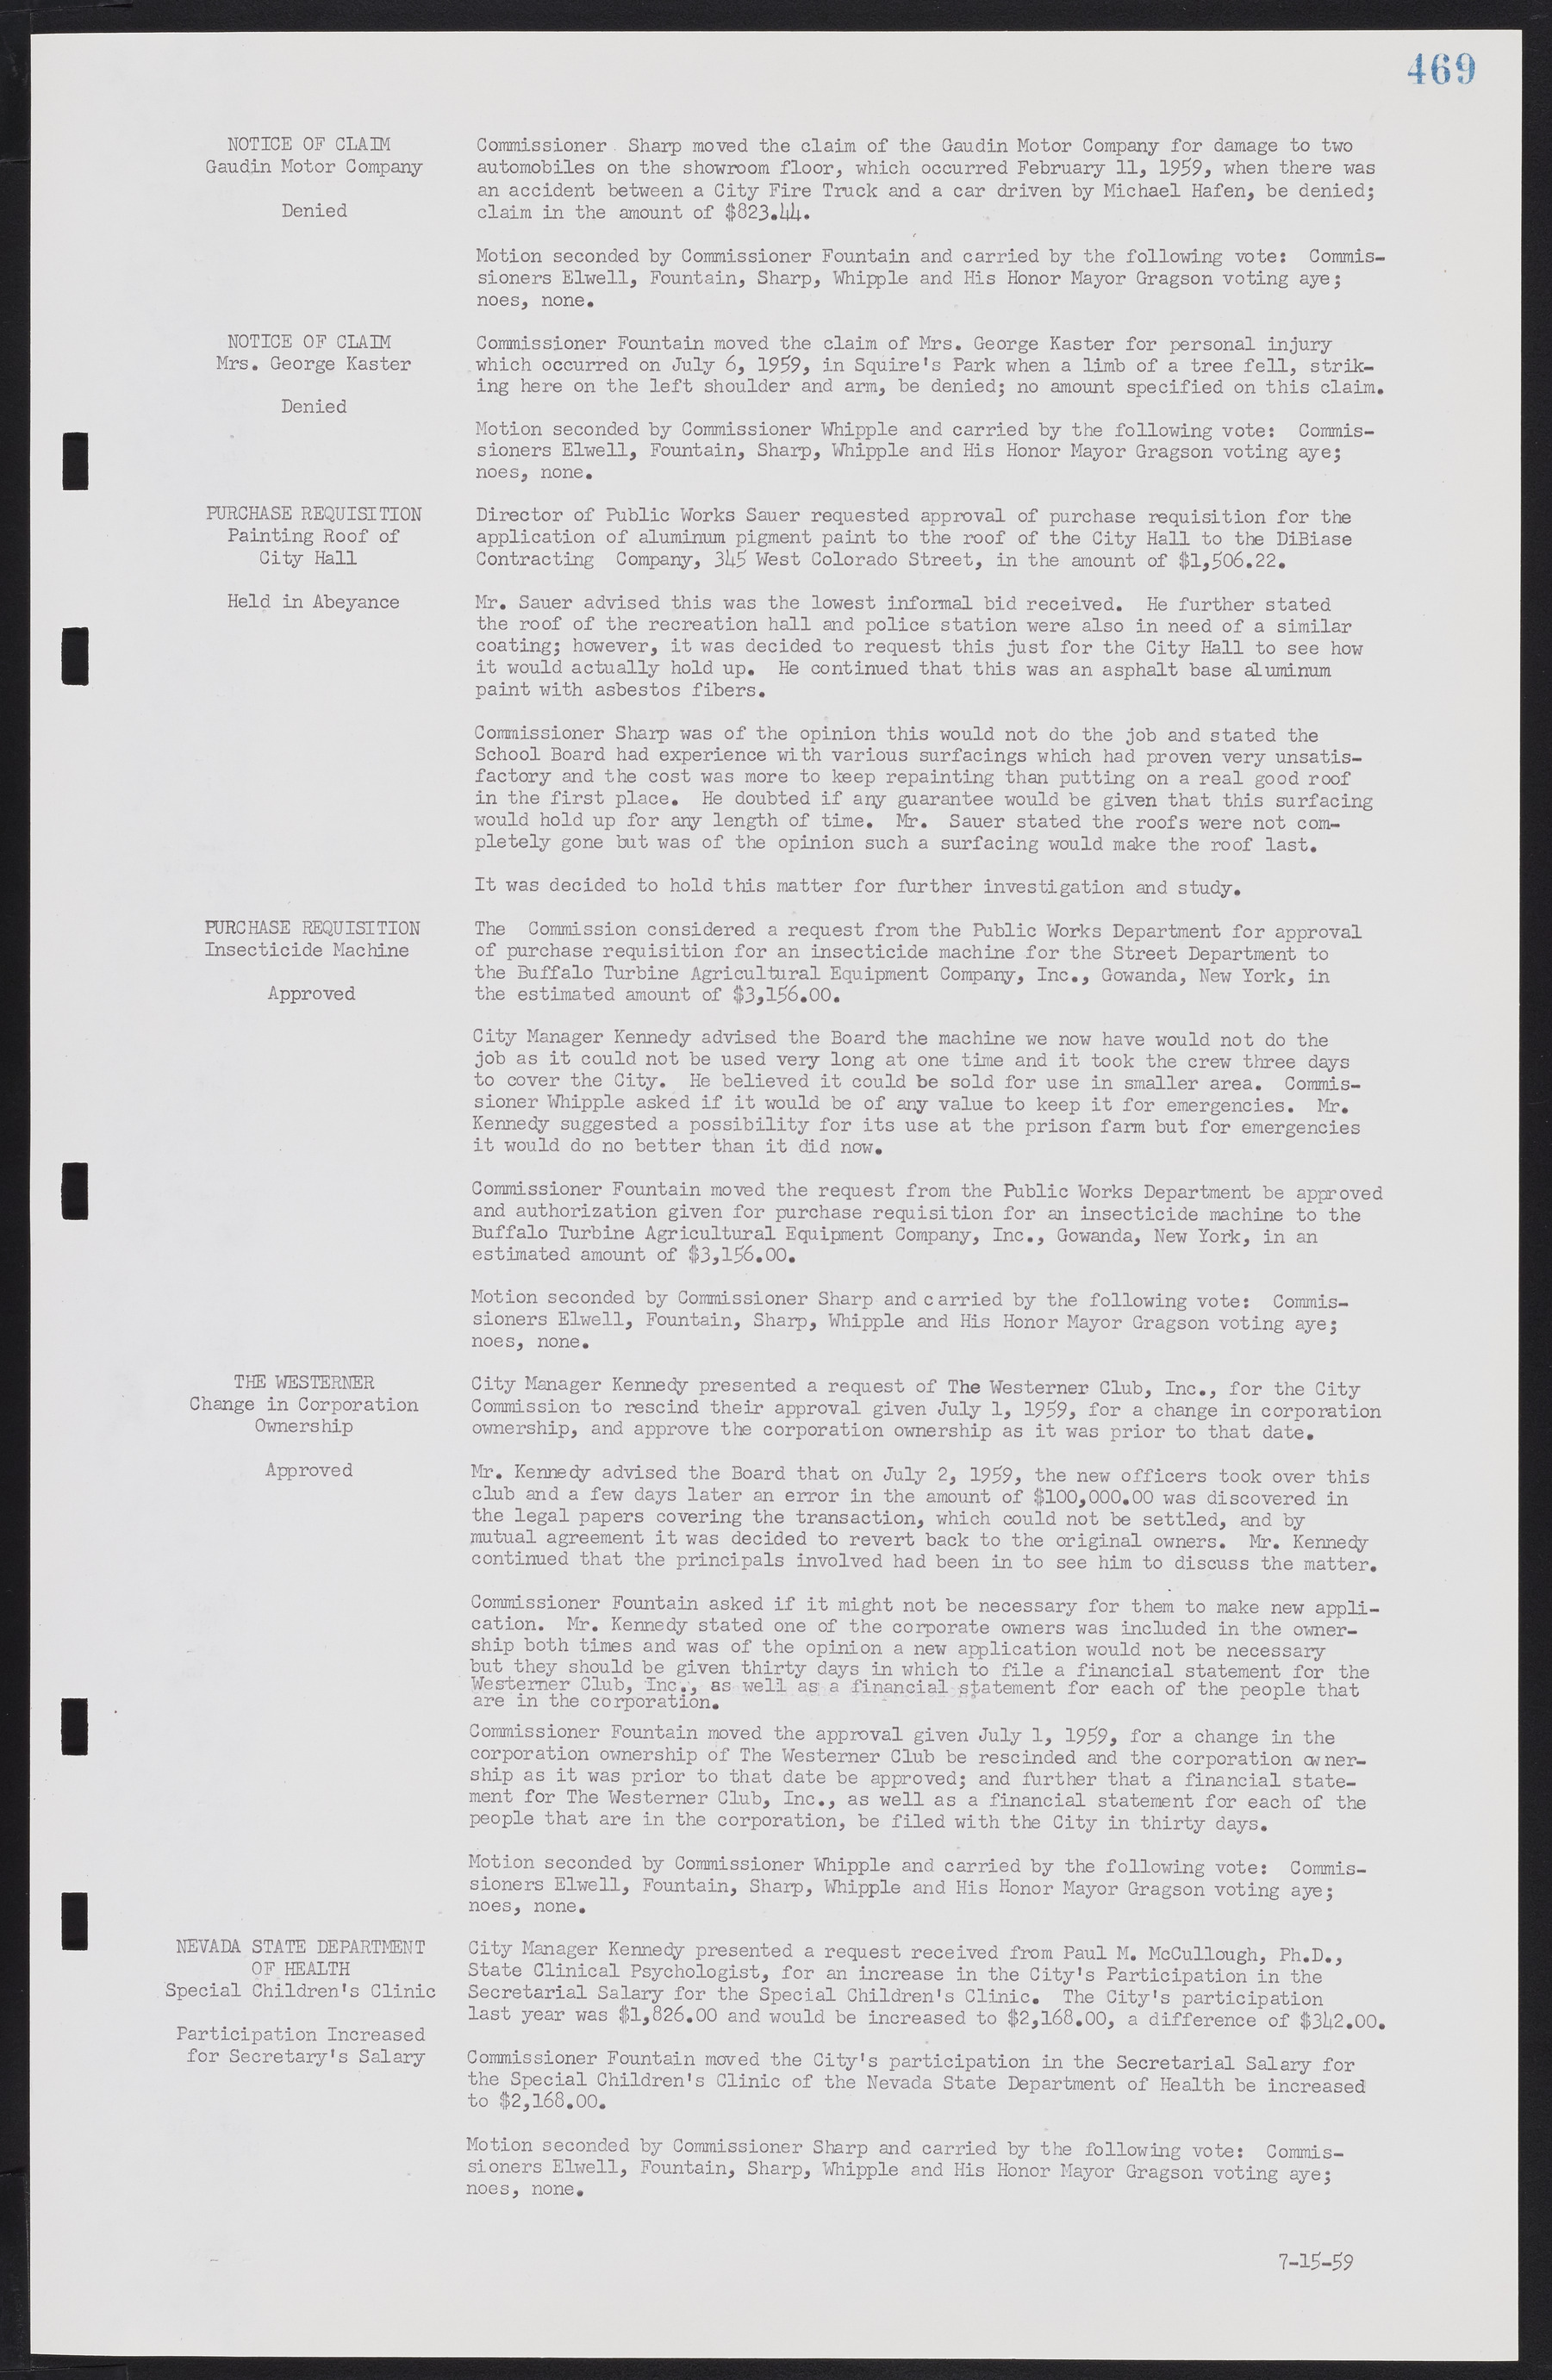 Las Vegas City Commission Minutes, November 20, 1957 to December 2, 1959, lvc000011-505